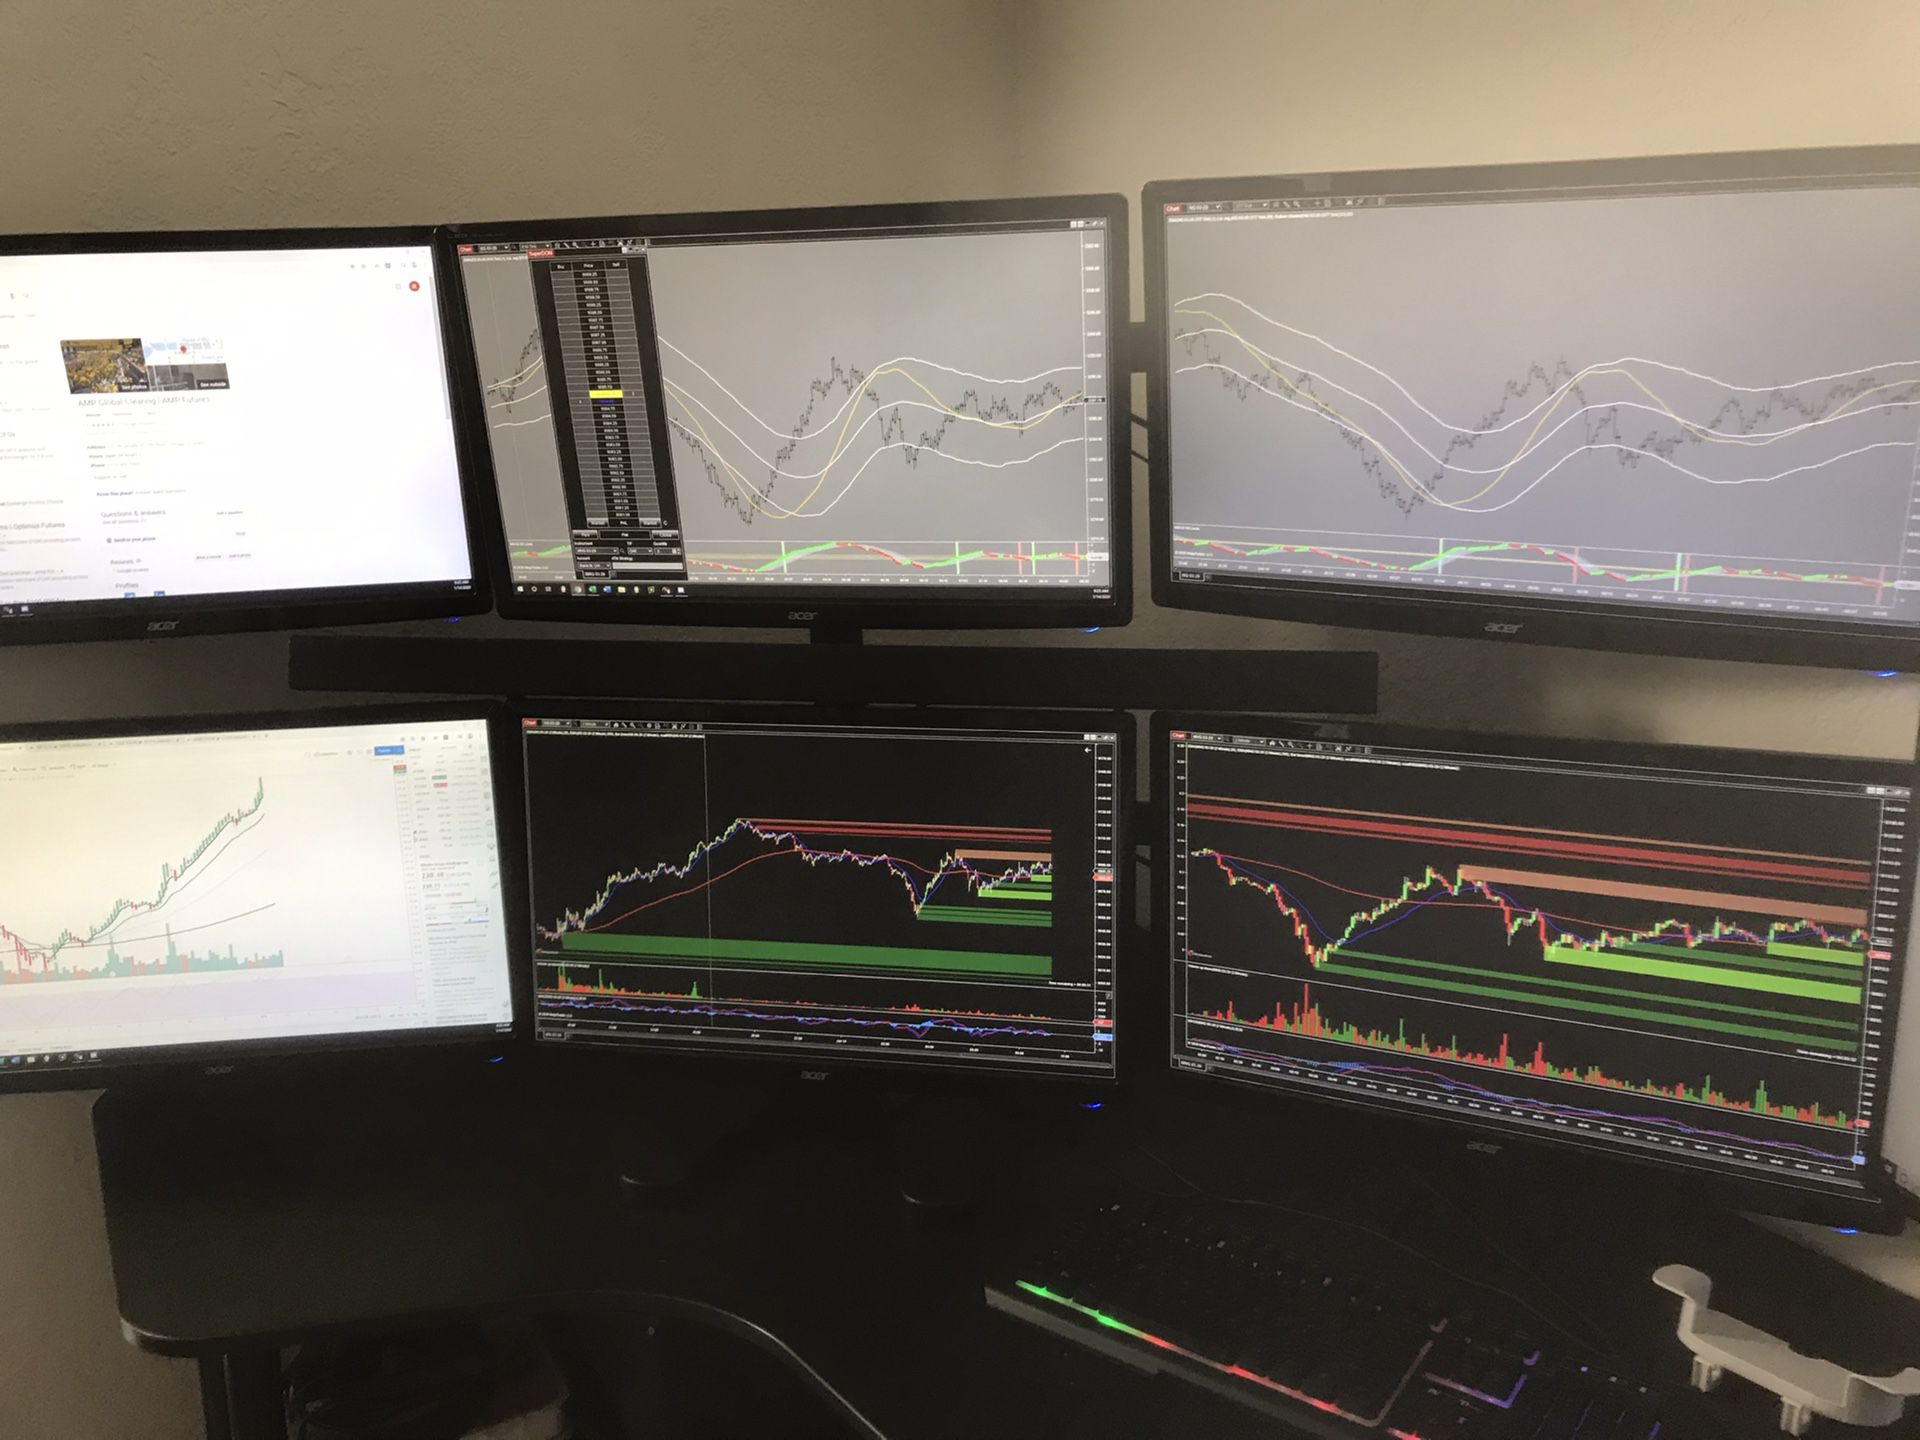 Super computer, trading setup, 7 monitors, I9 9th gen, or gaming